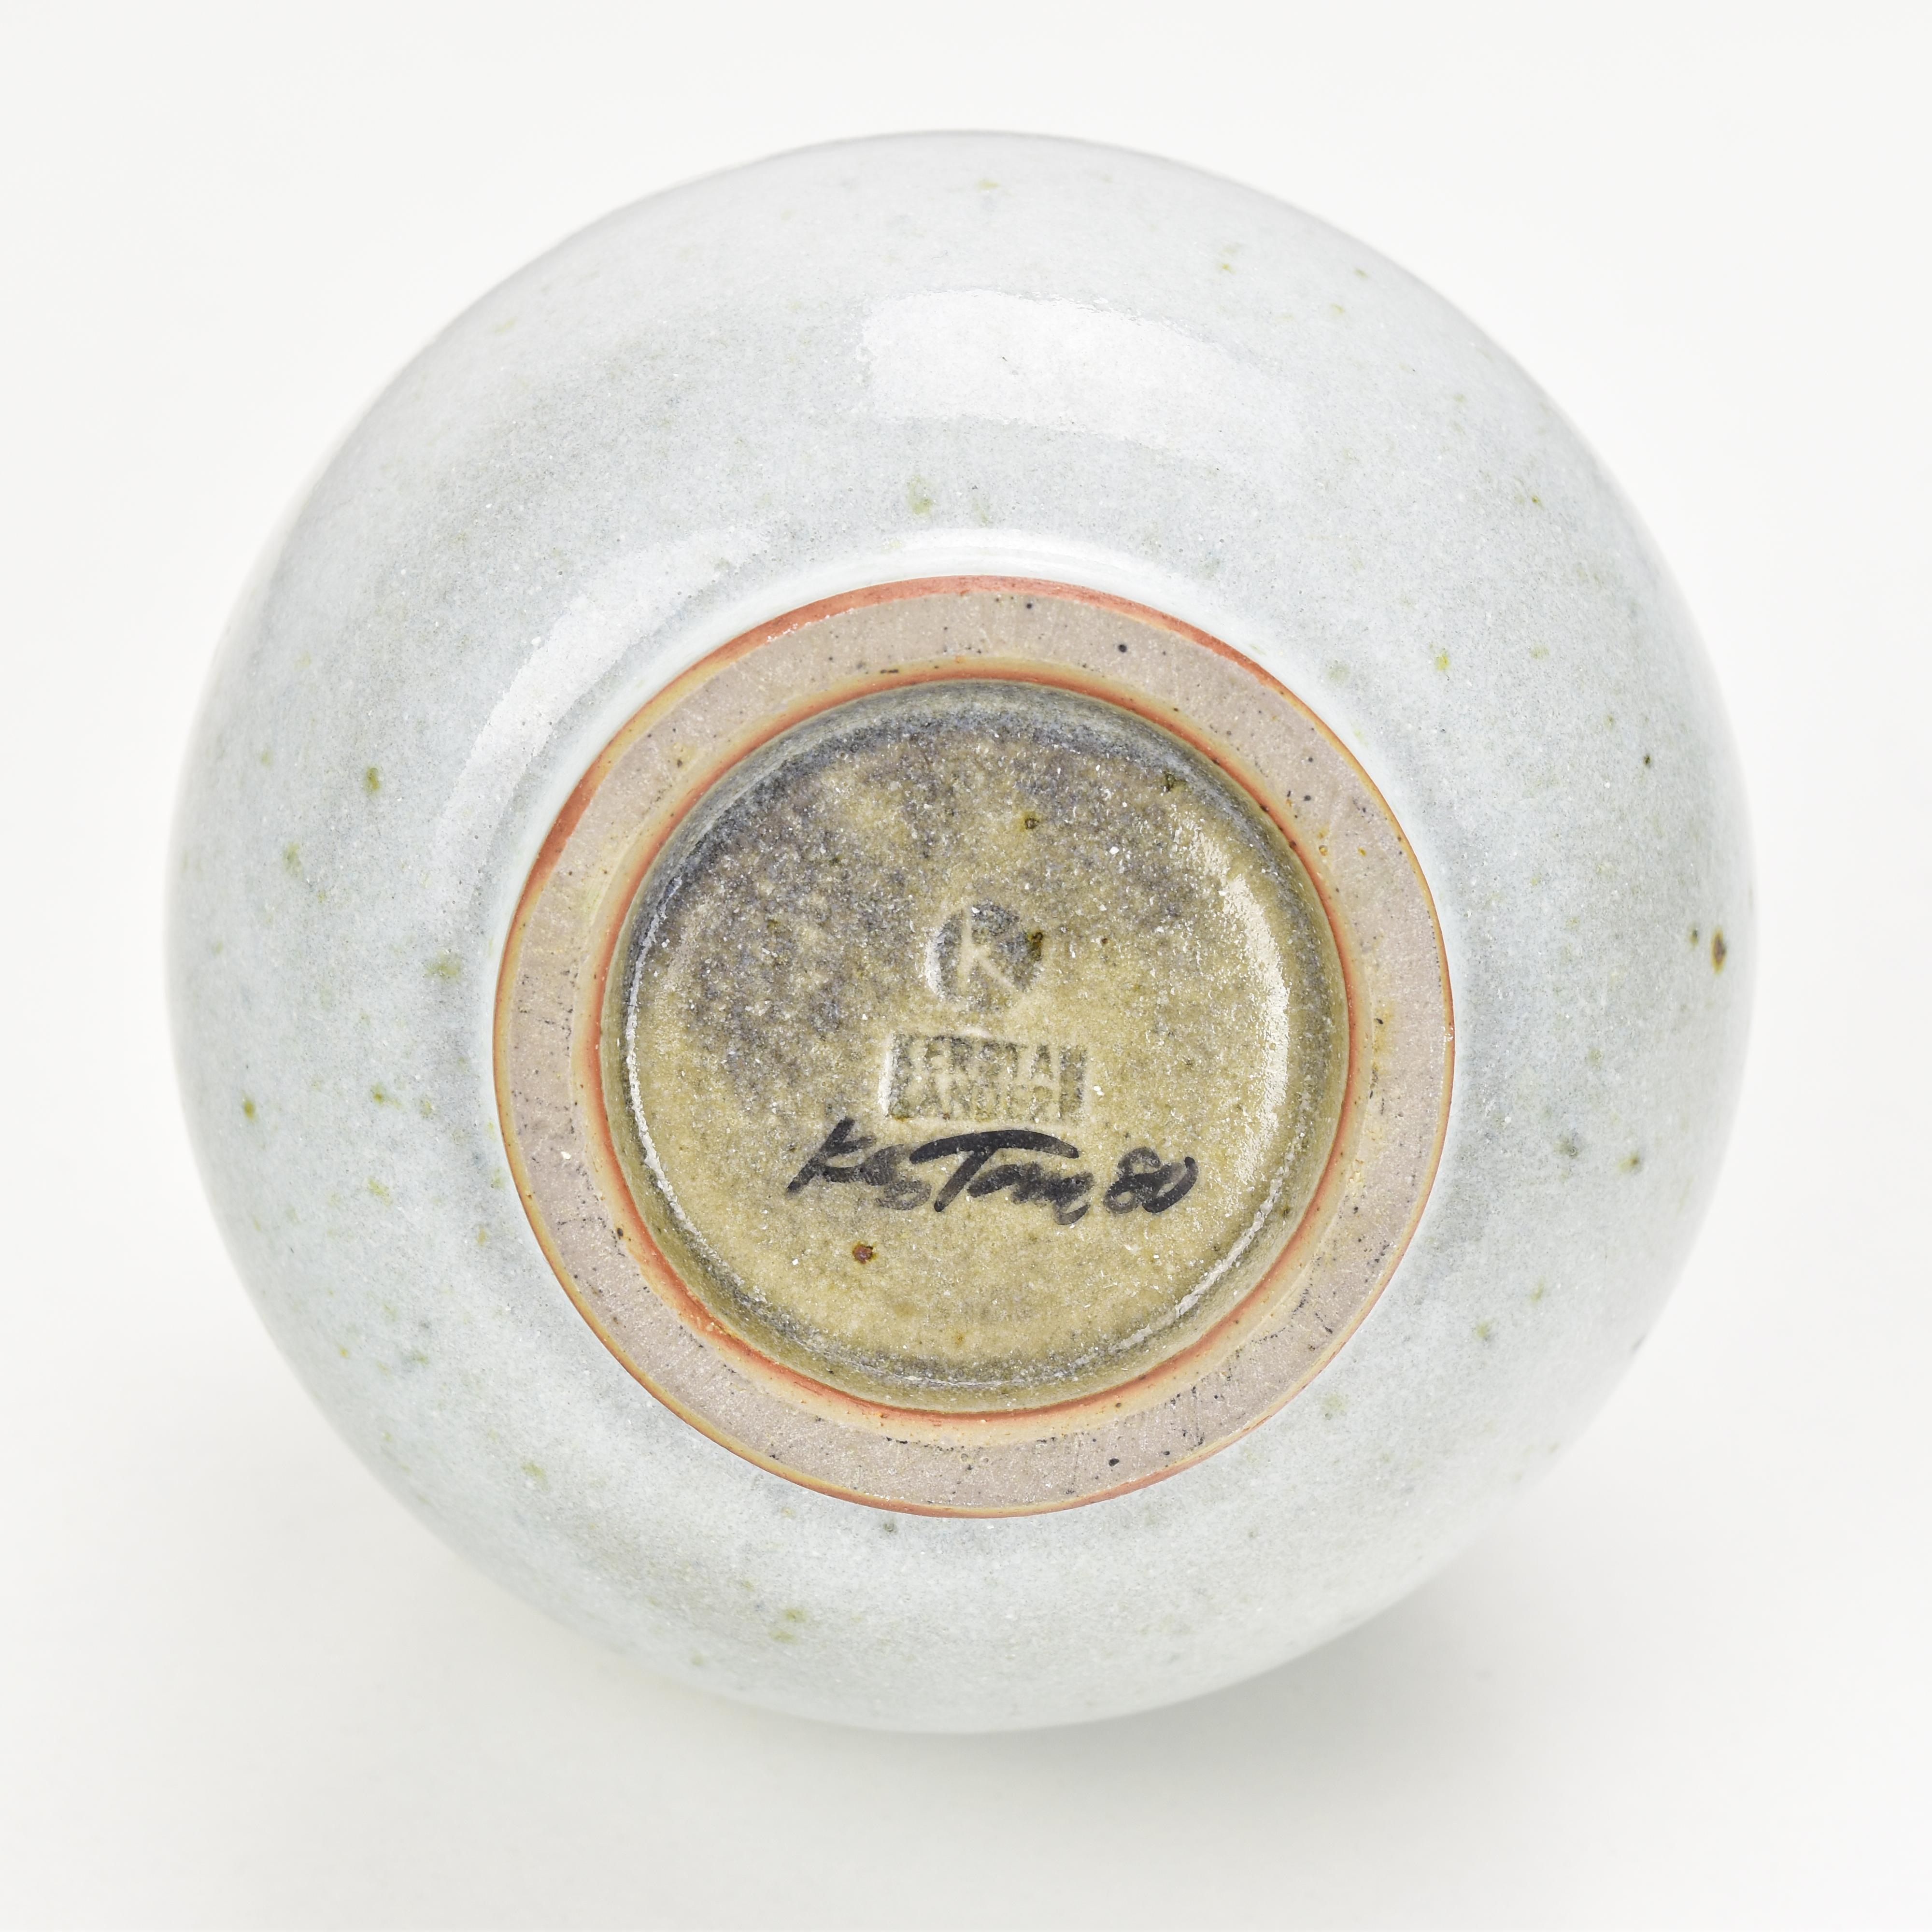 Ceramic Horst Kerstan Studio Art Pottery Vase signed & dated 1980 Glazed Stoneware For Sale